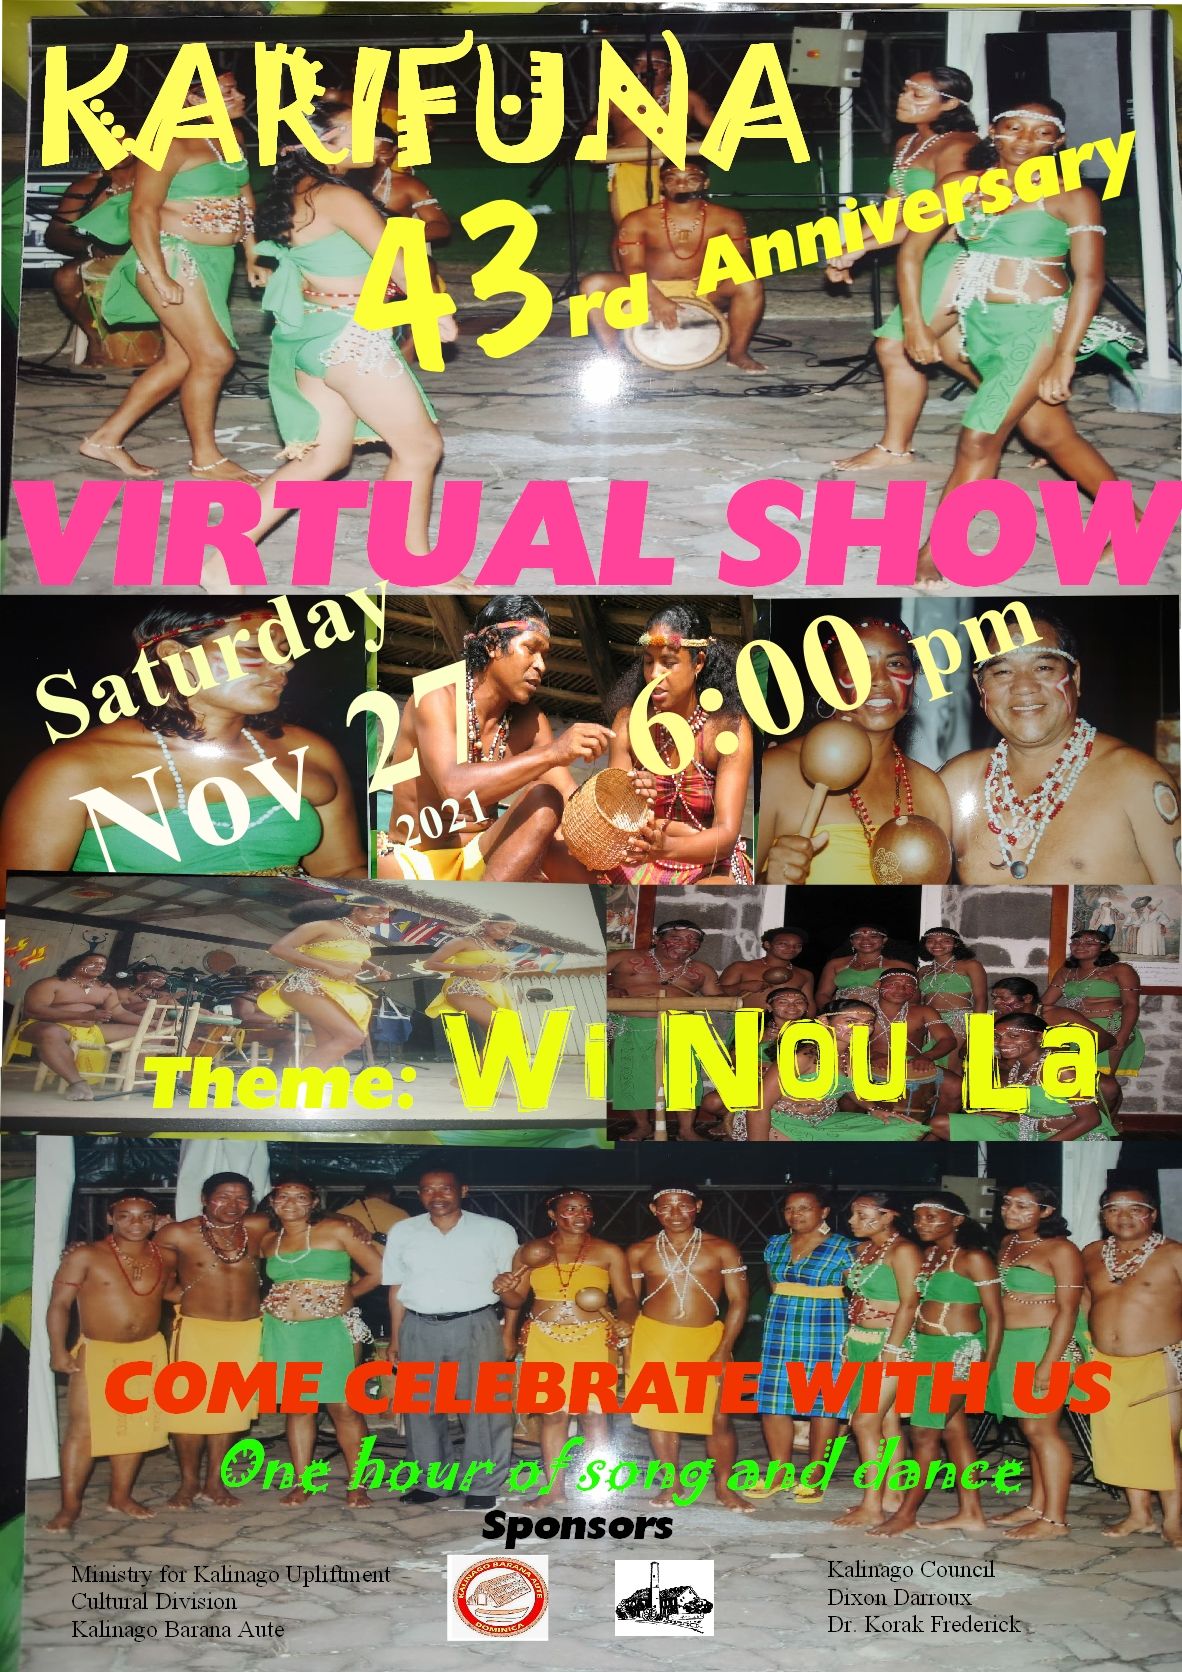 KARIFUNA 43rd Anniversary Virtual Show